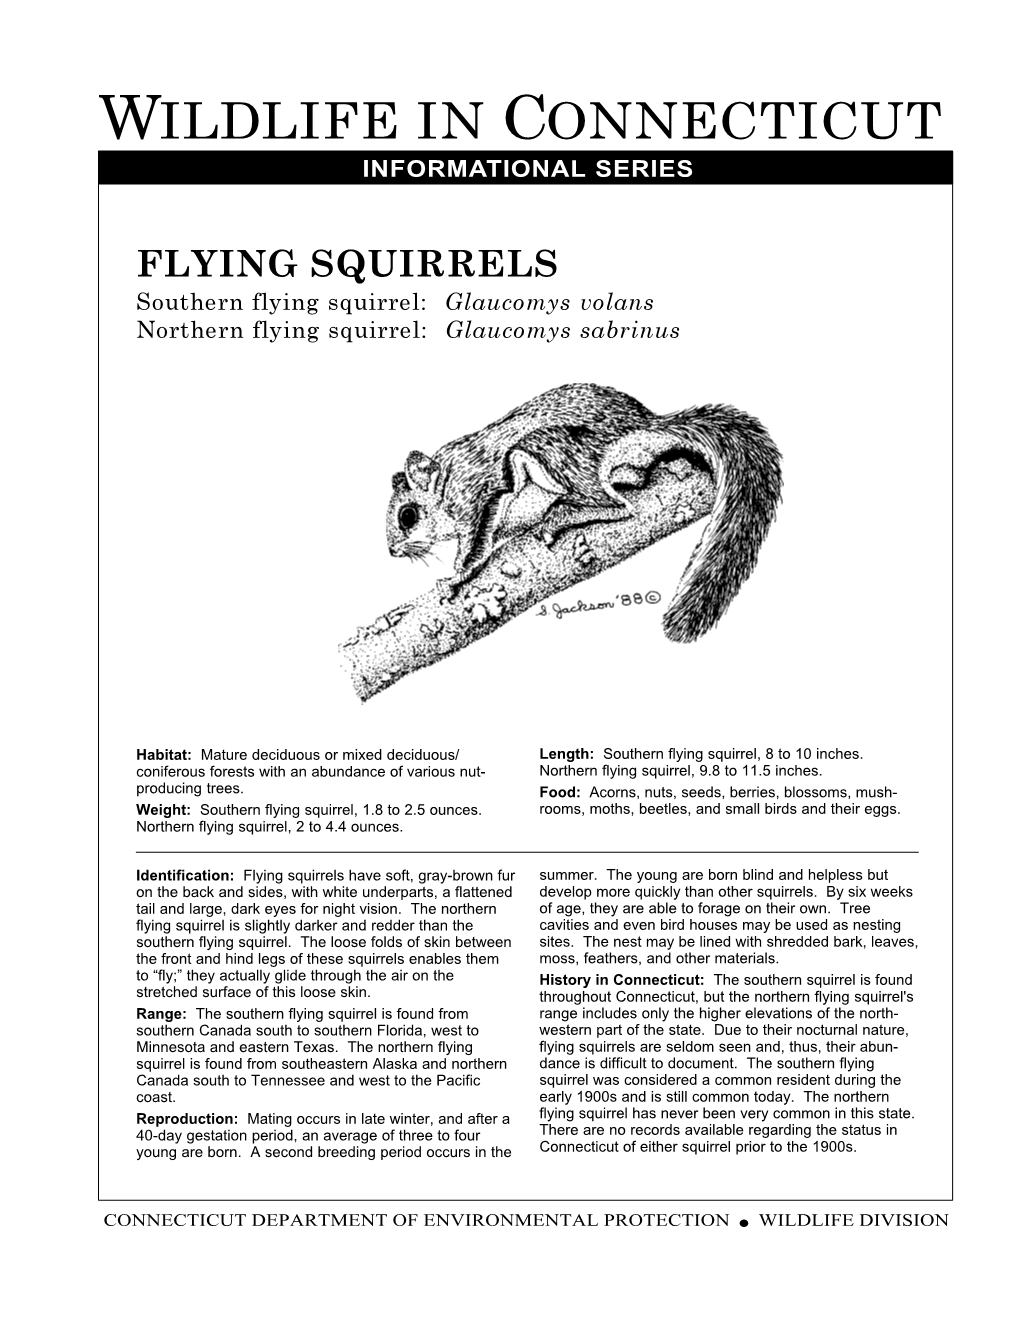 FLYING SQUIRRELS Southern Flying Squirrel: Glaucomys Volans Northern Flying Squirrel: Glaucomys Sabrinus